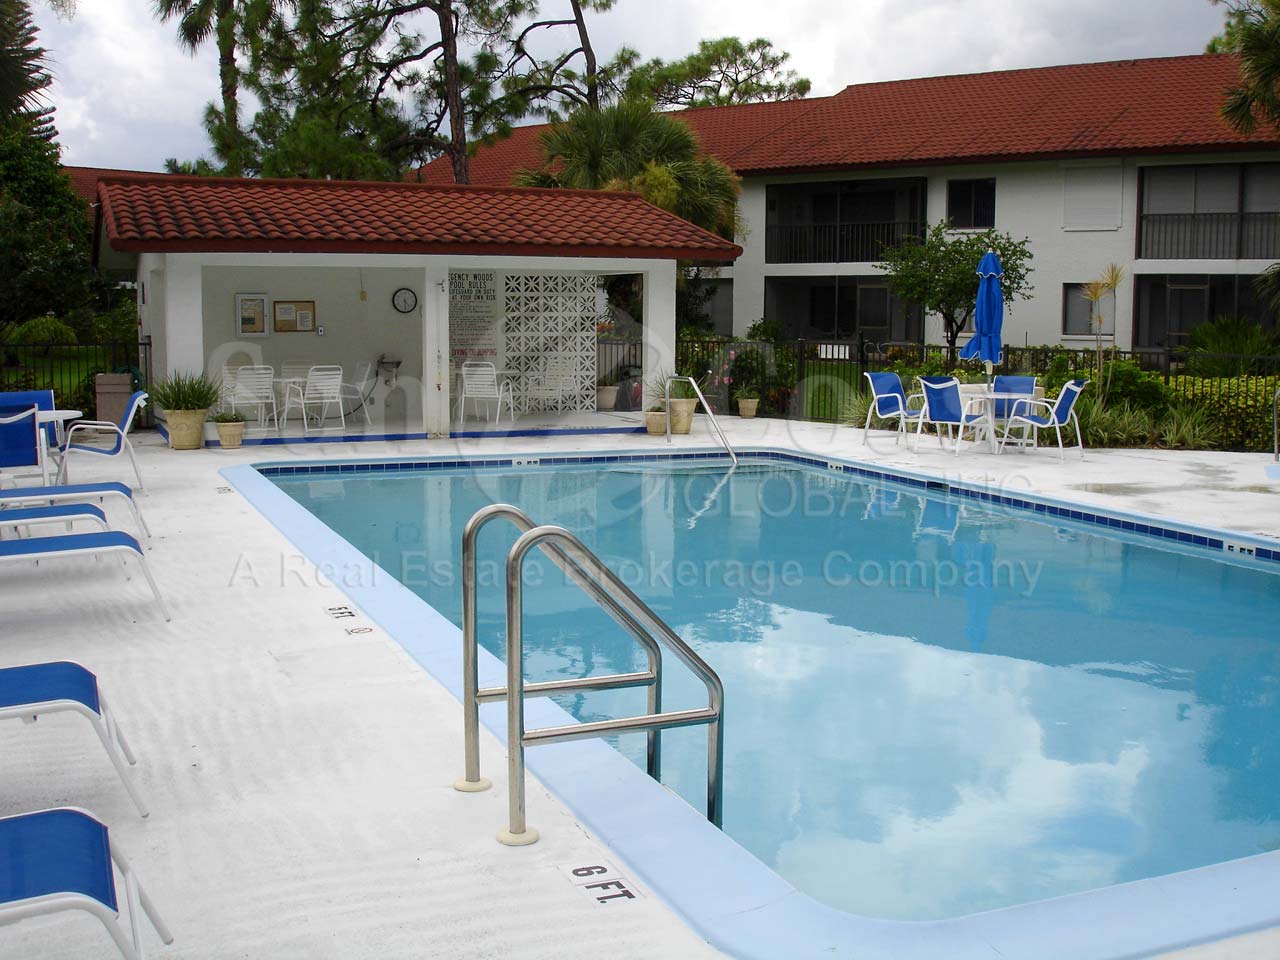 Regency Woods Community Pool and Cabana